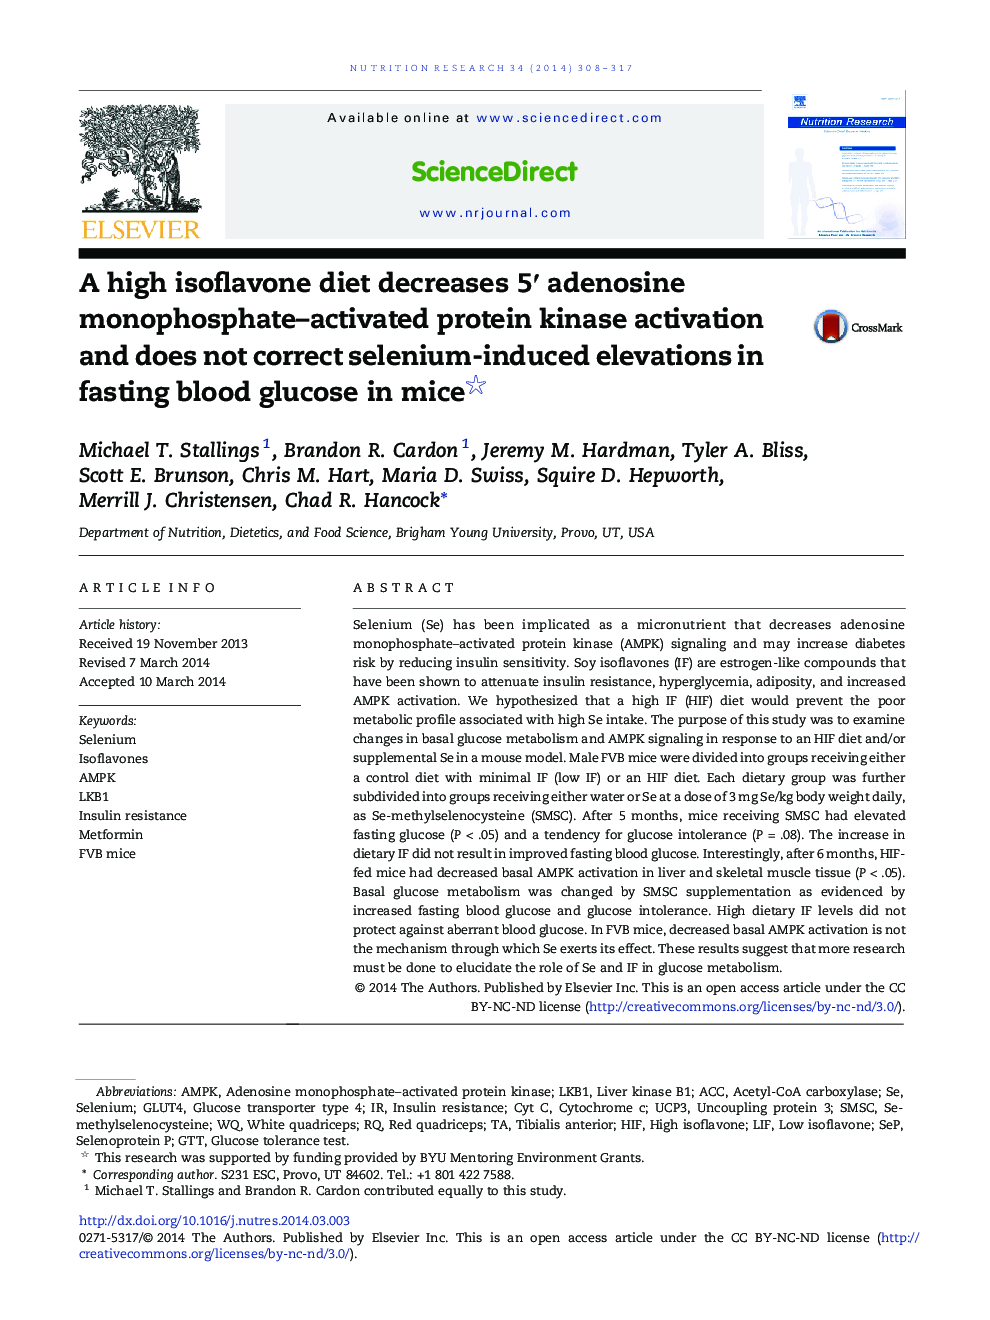 A high isoflavone diet decreases 5â² adenosine monophosphate-activated protein kinase activation and does not correct selenium-induced elevations in fasting blood glucose in mice